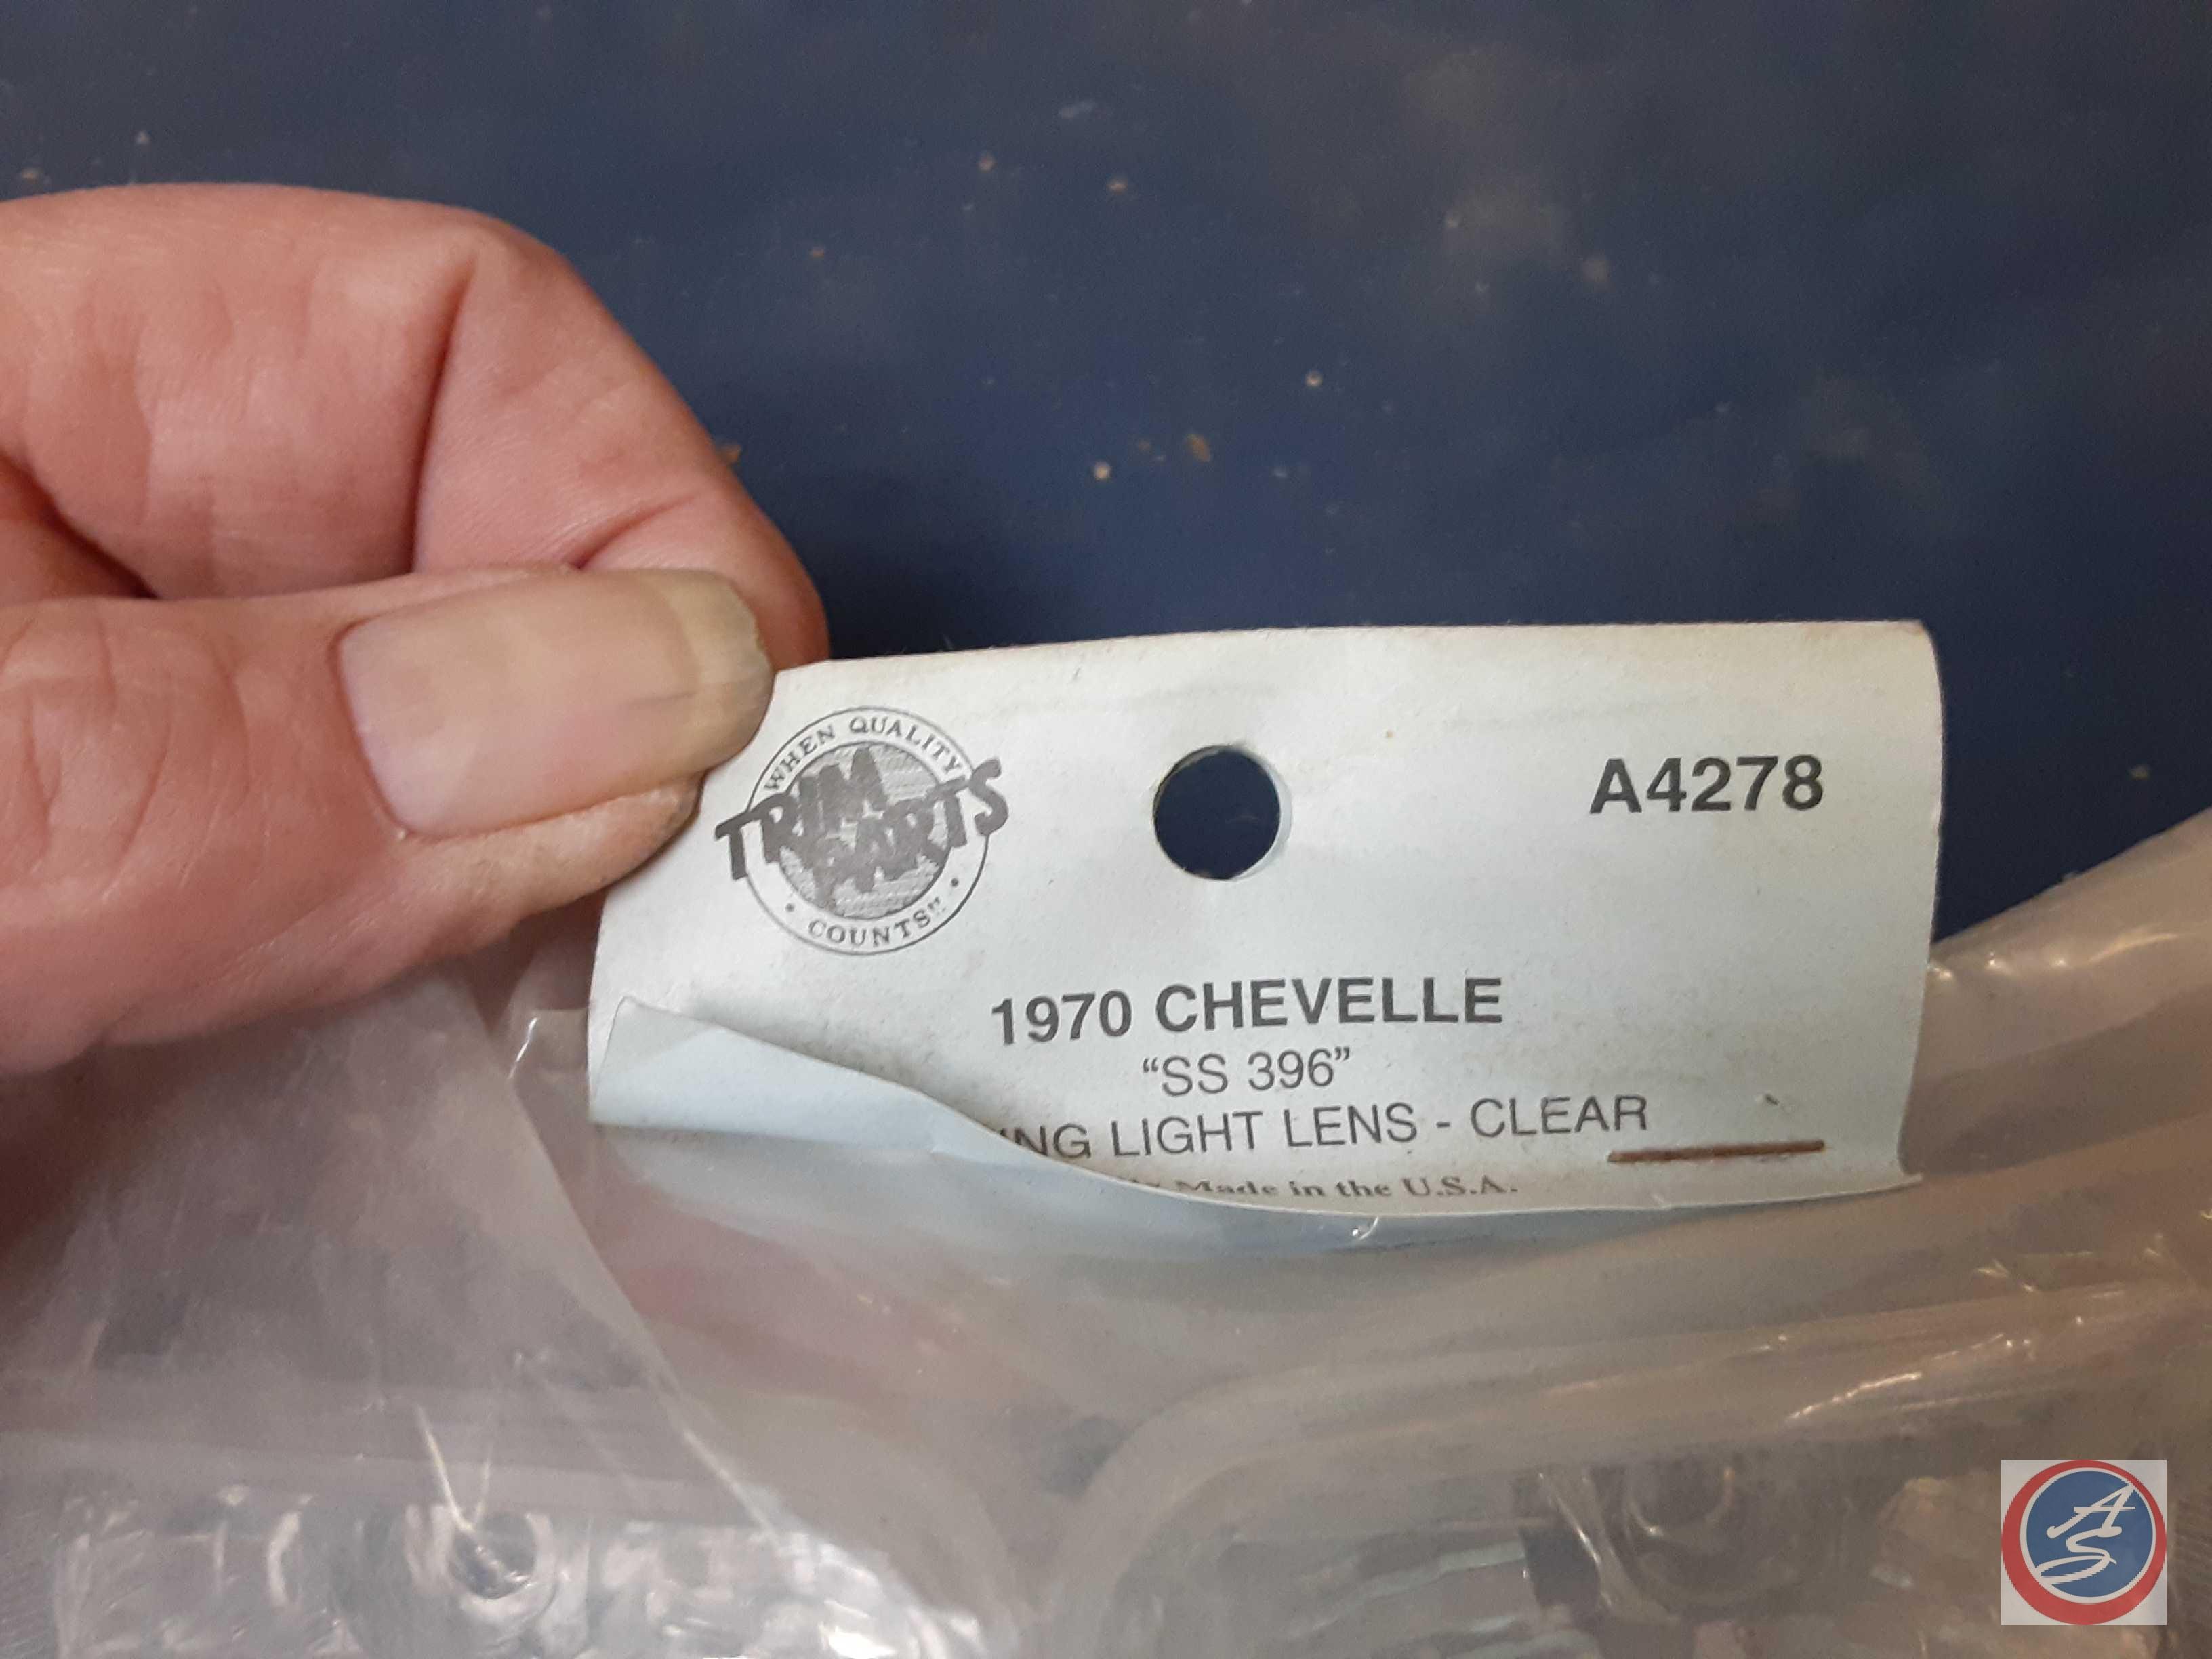 Assortment of Chevrolet Trunk Emblems, Trim Parts Parking Light Lens 1970 Chevelle 'SS 396' - A4278,